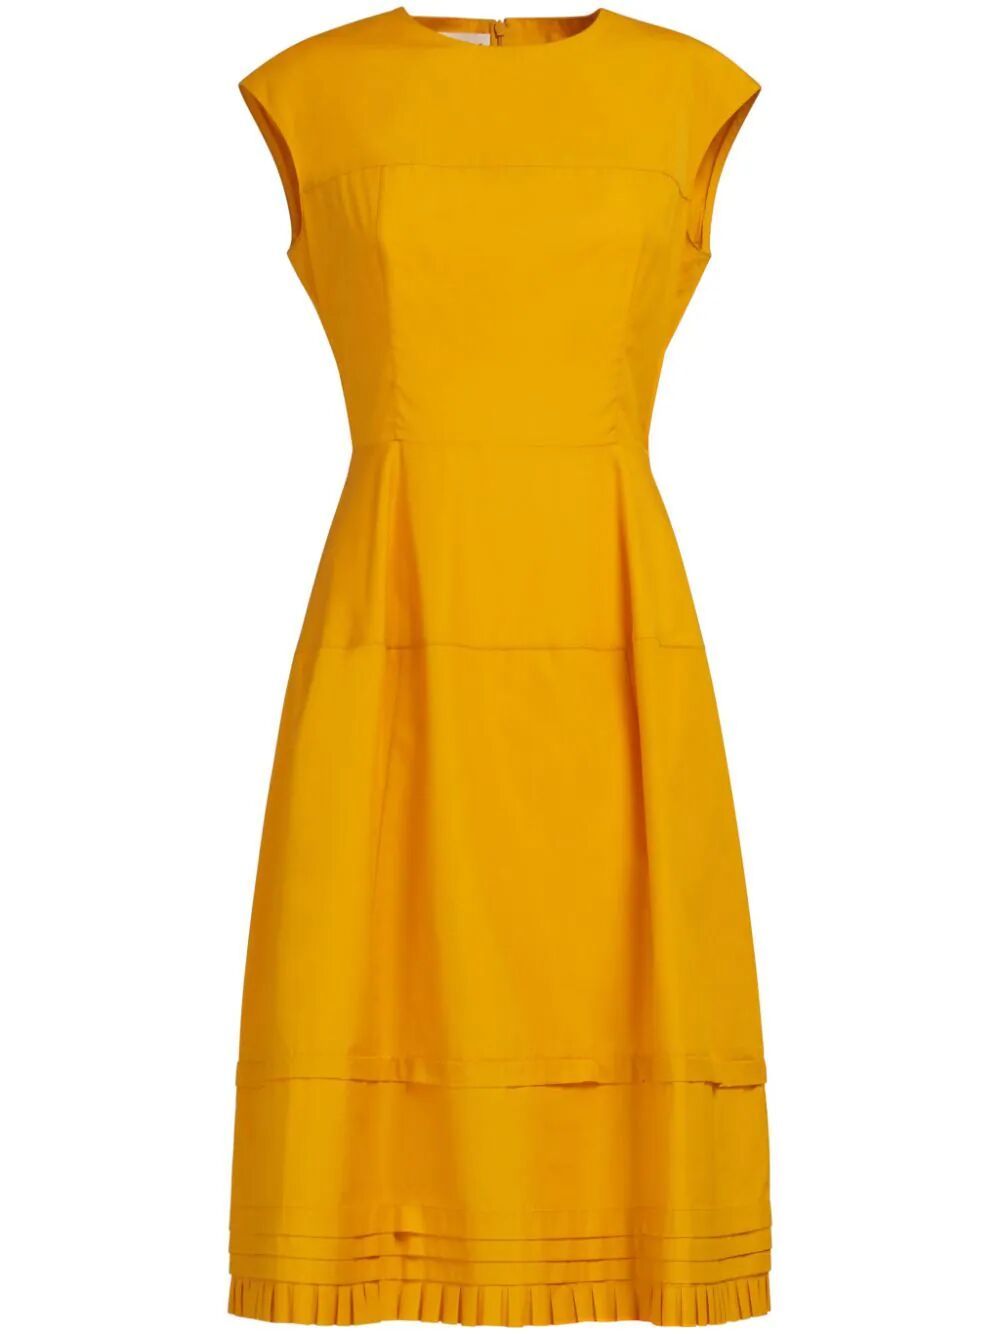 MARNI Yellow Cotton Midi Dress for Women